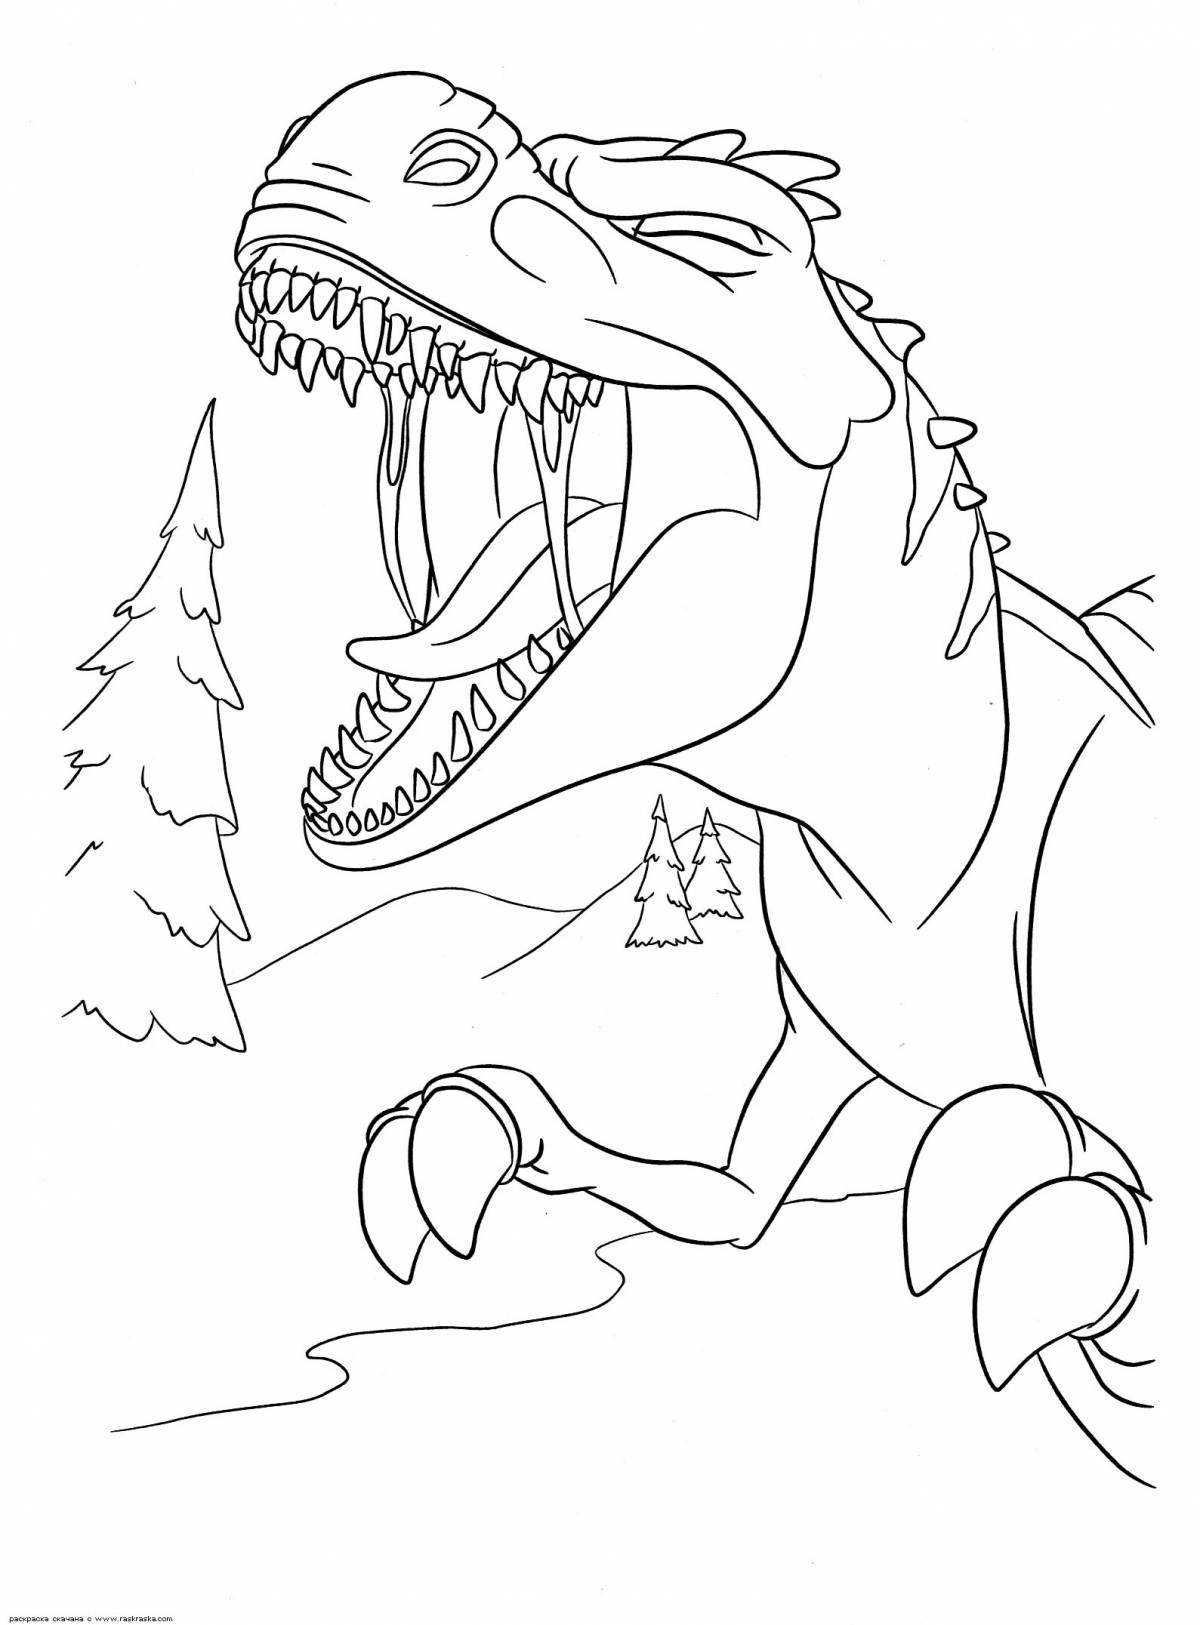 Tarbosaurus cartoon coloring book